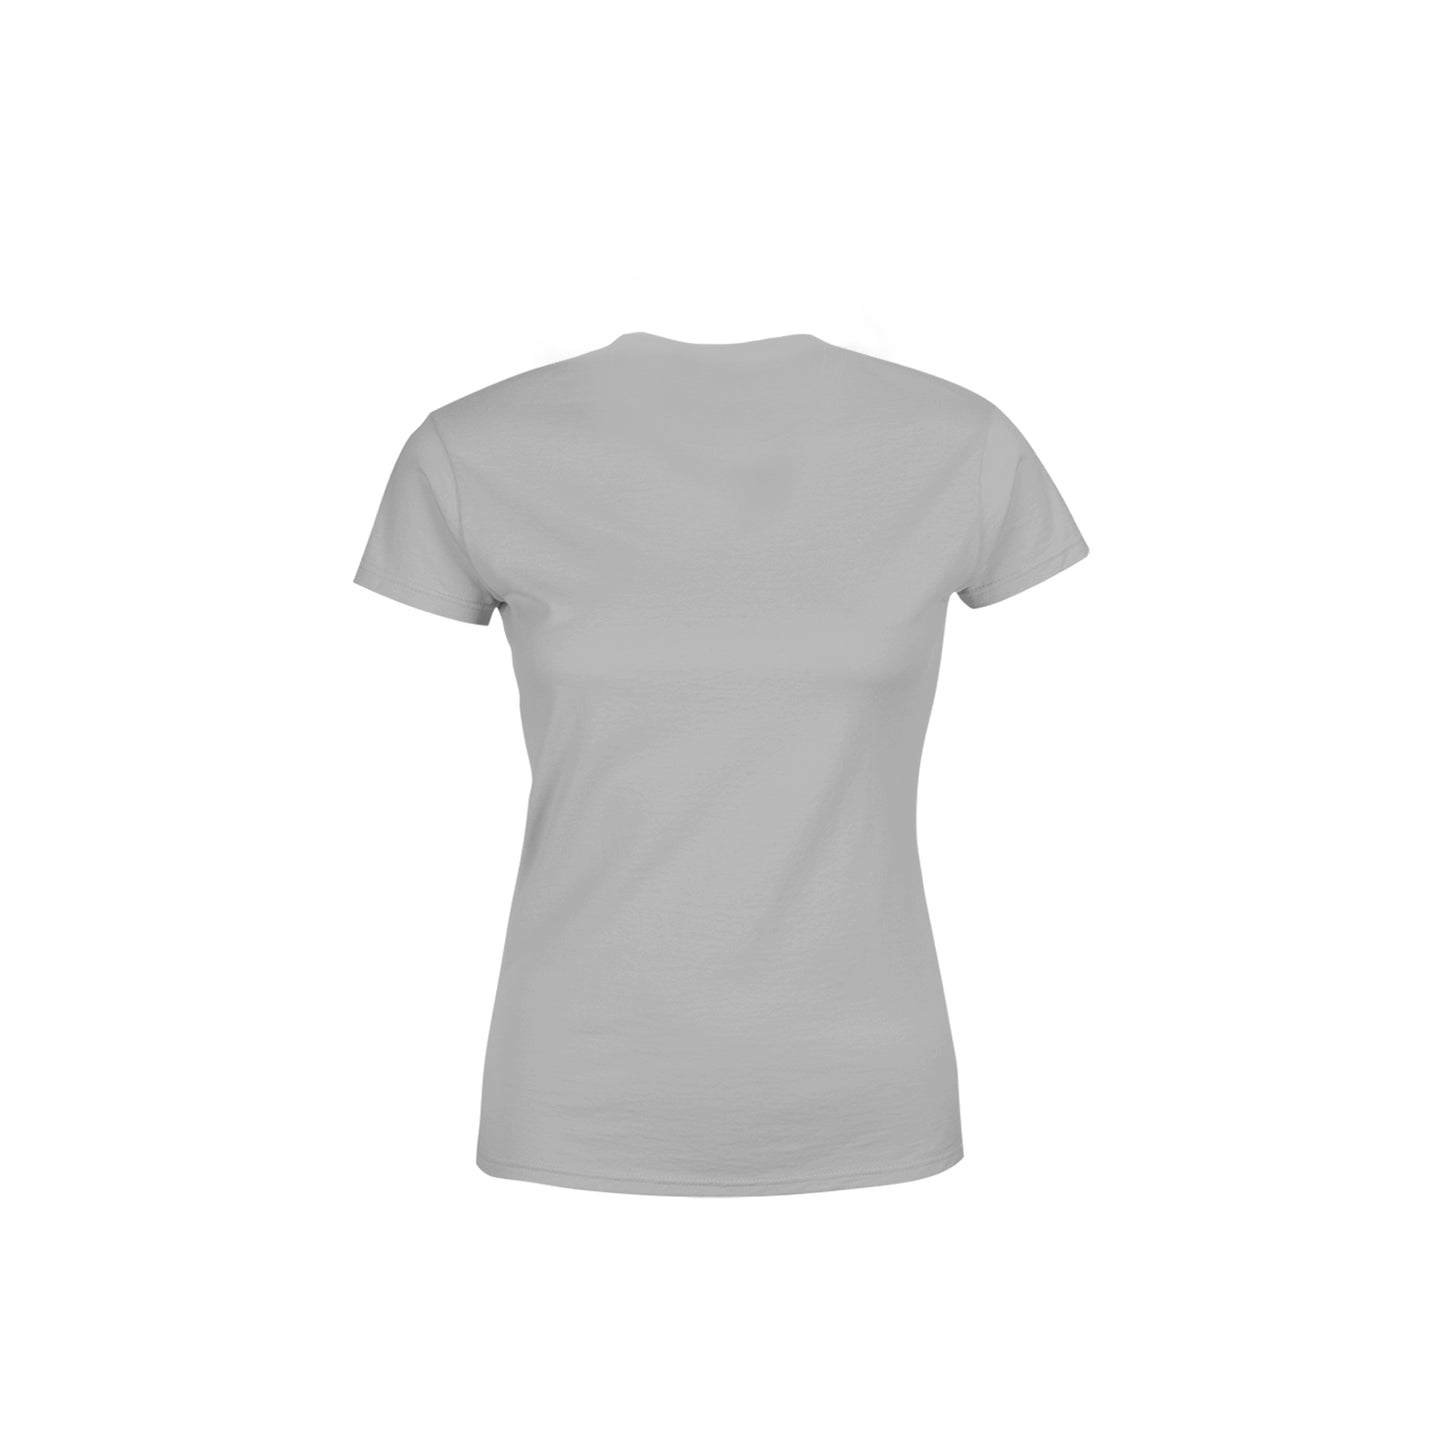 00 Number Women's T-Shirt (Melange Grey)